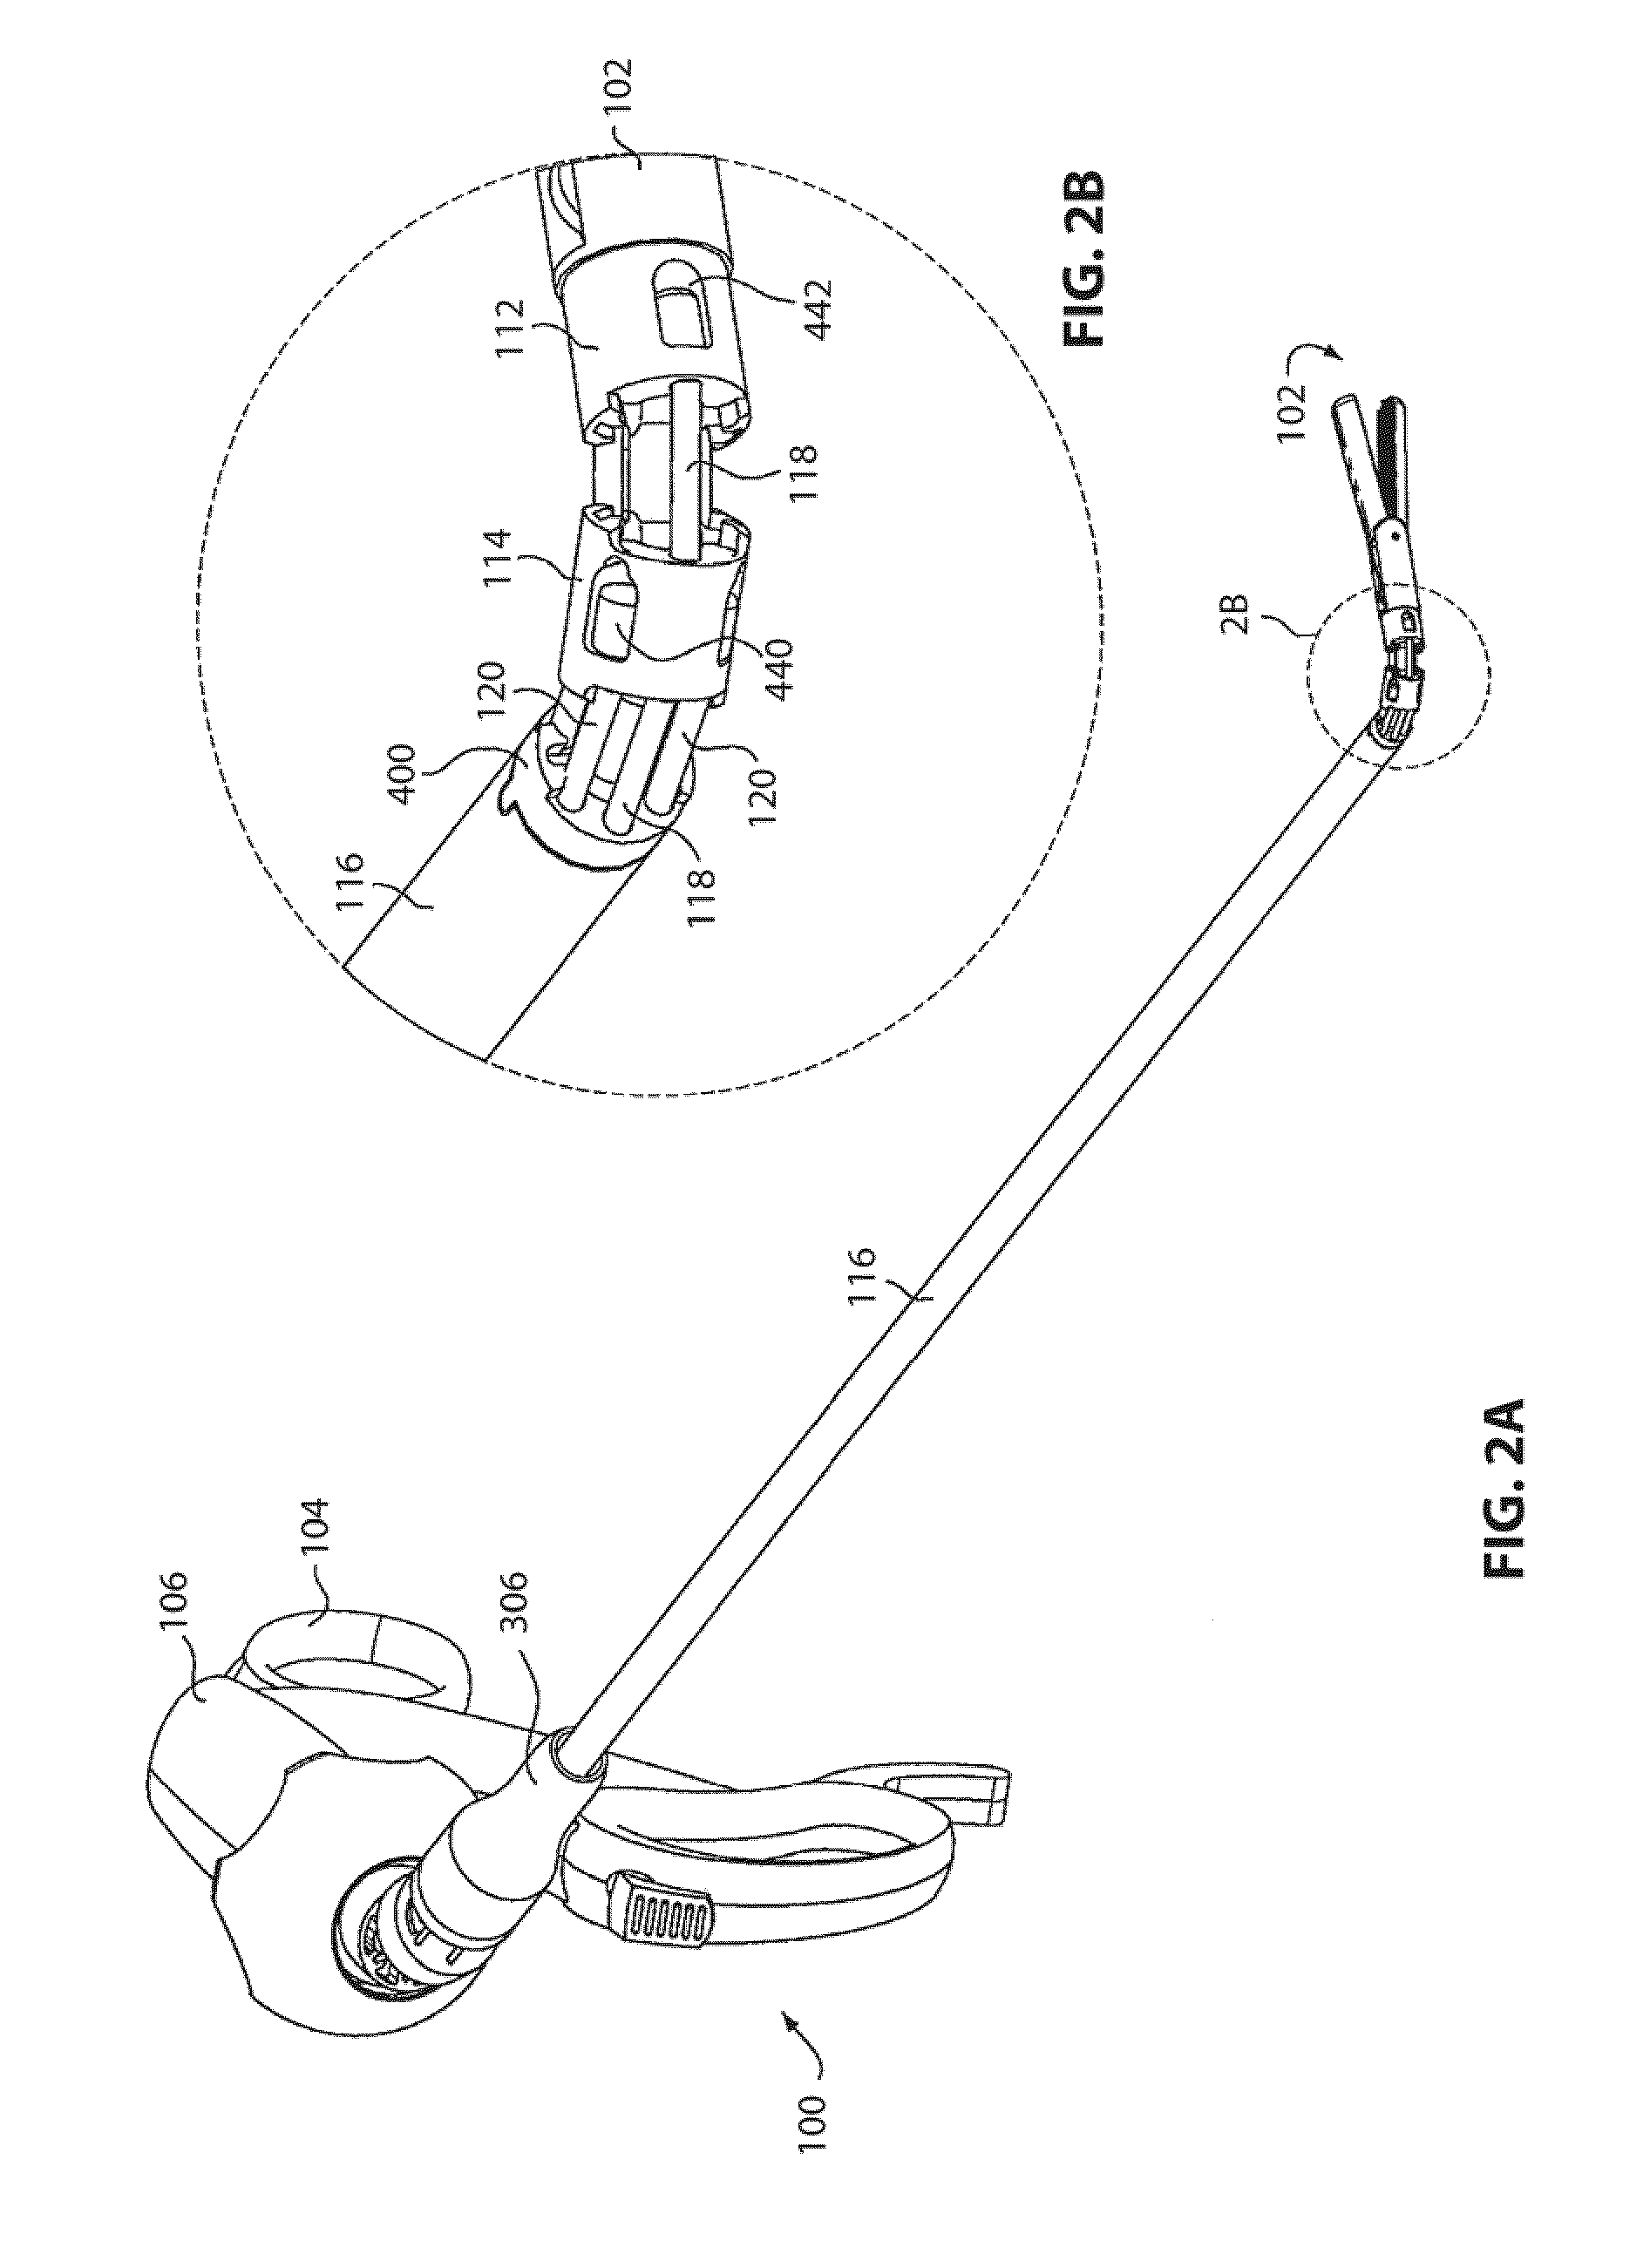 Instrument with articulation lock